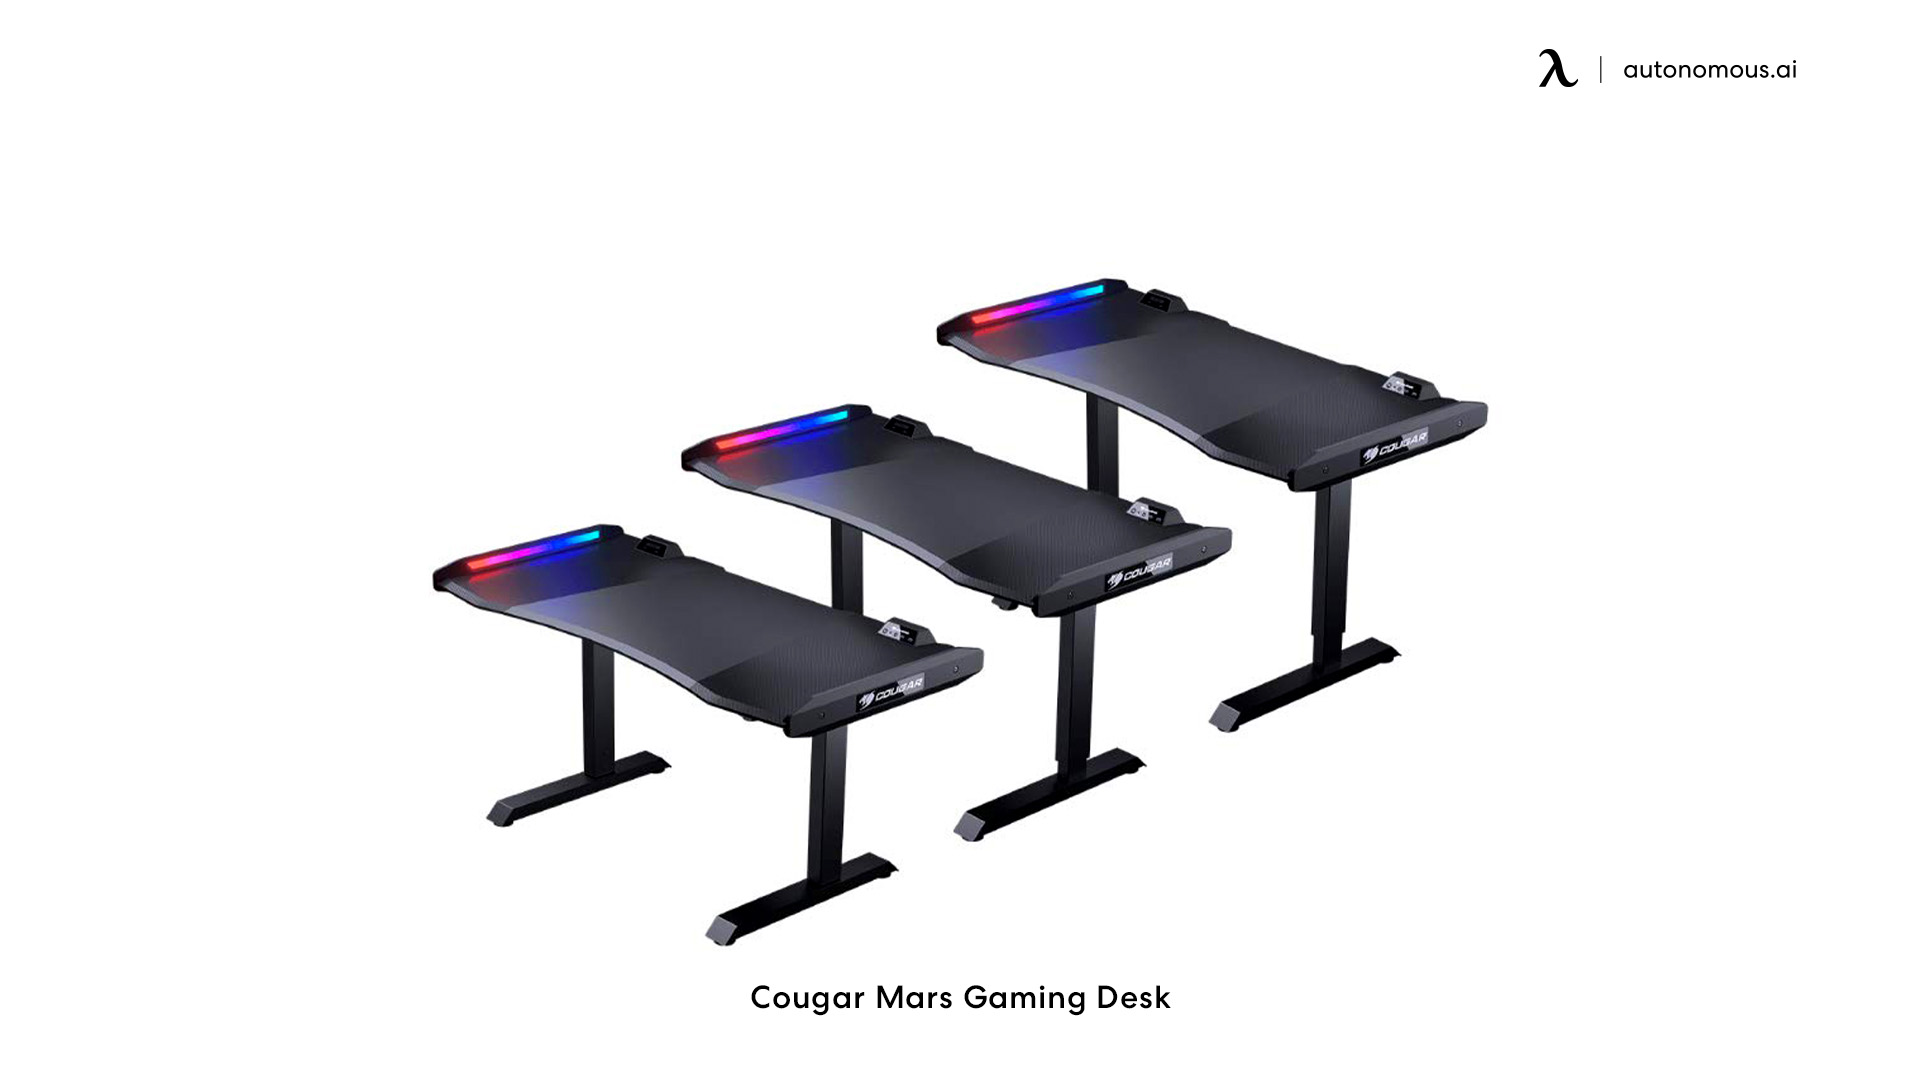 Cougar Mars Gaming Desk